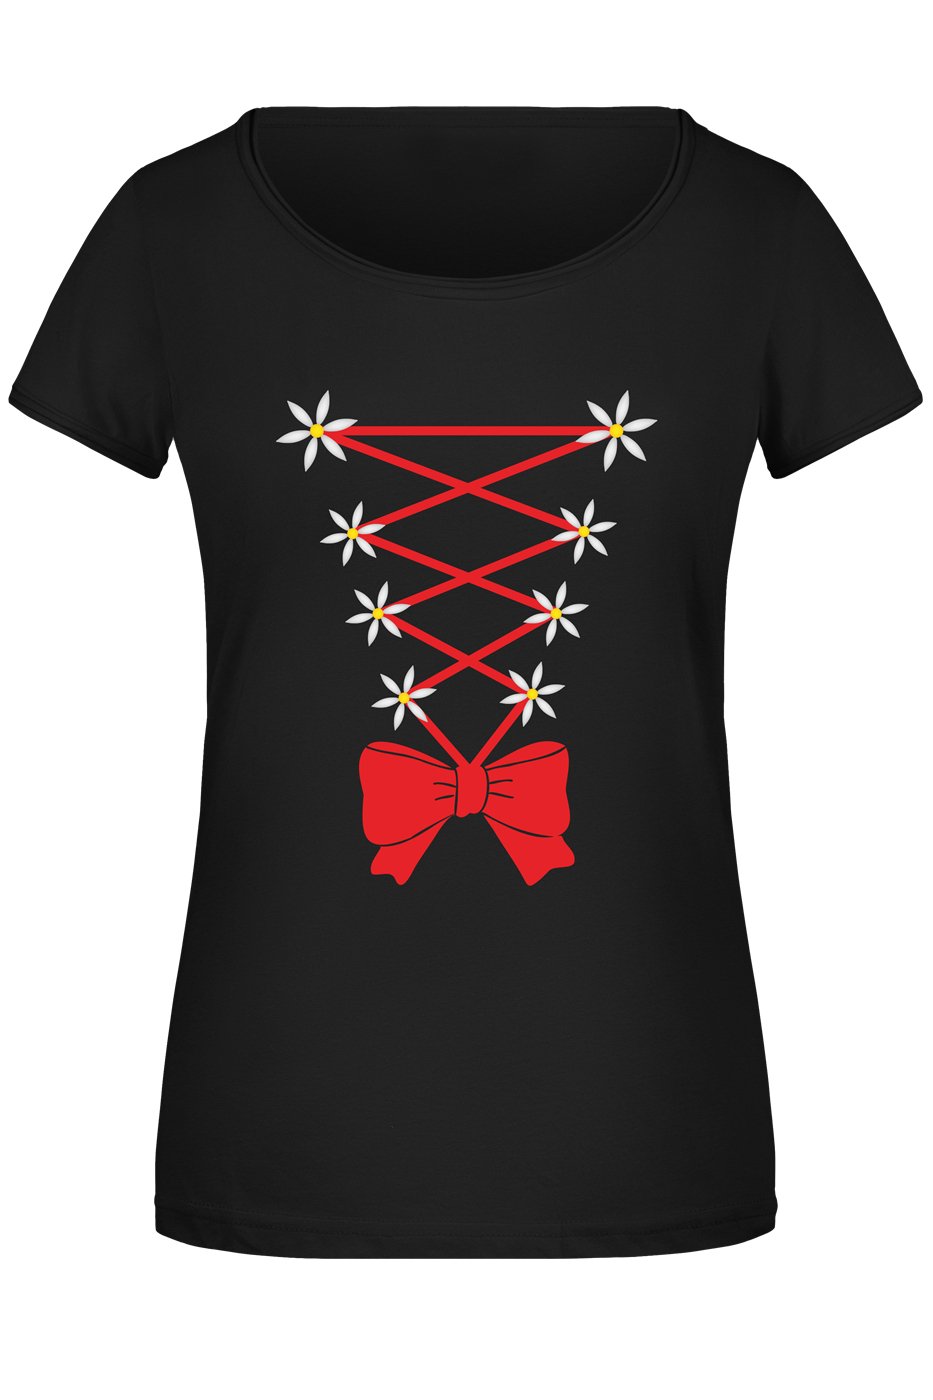 Bild: T-Shirt Damen - Dirndl Design Geschenkidee